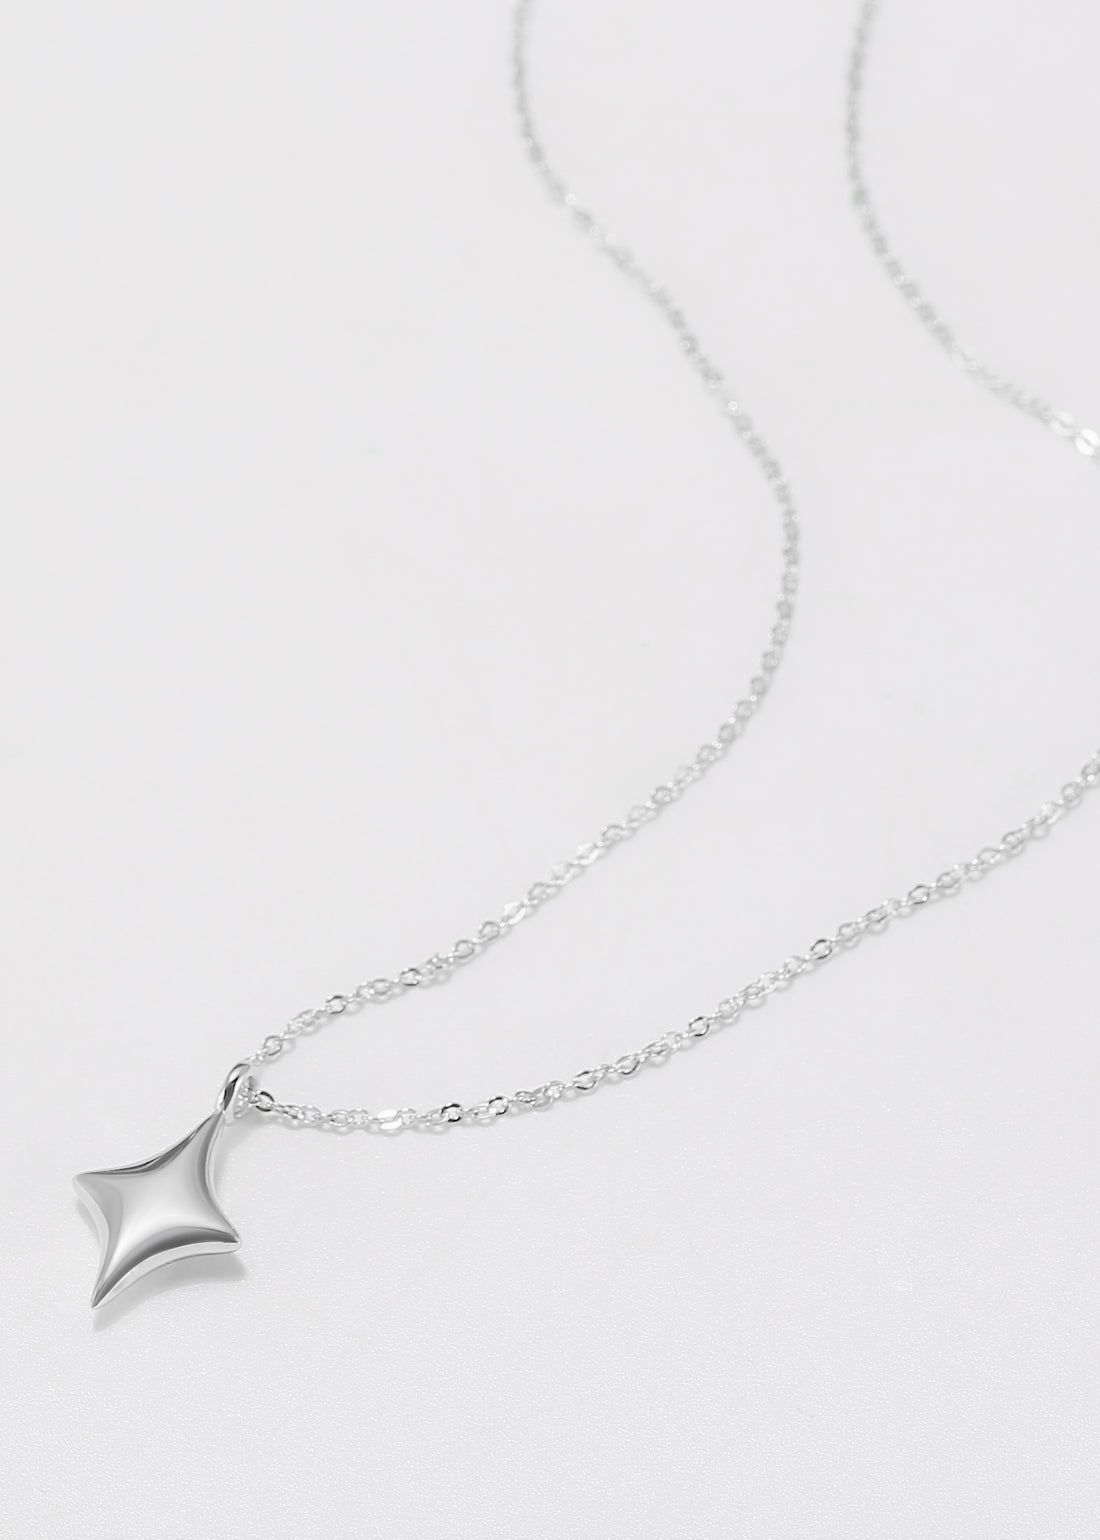 Starlight Chain - Sterling Silver